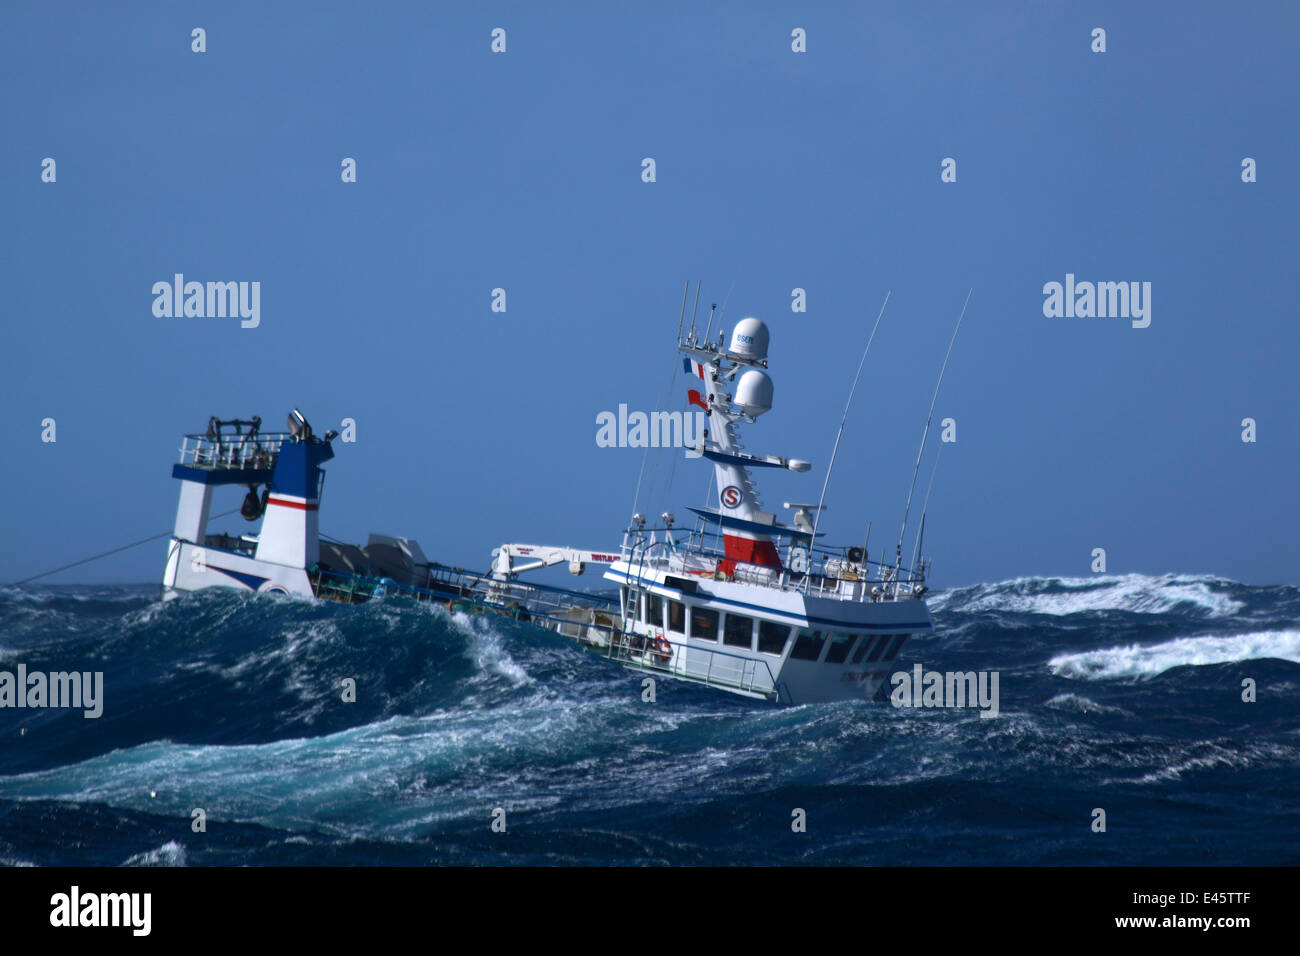 Fishing vessel 'Ocean Harvest' in huge waves on the North Sea, September 2010. Property released. Stock Photo